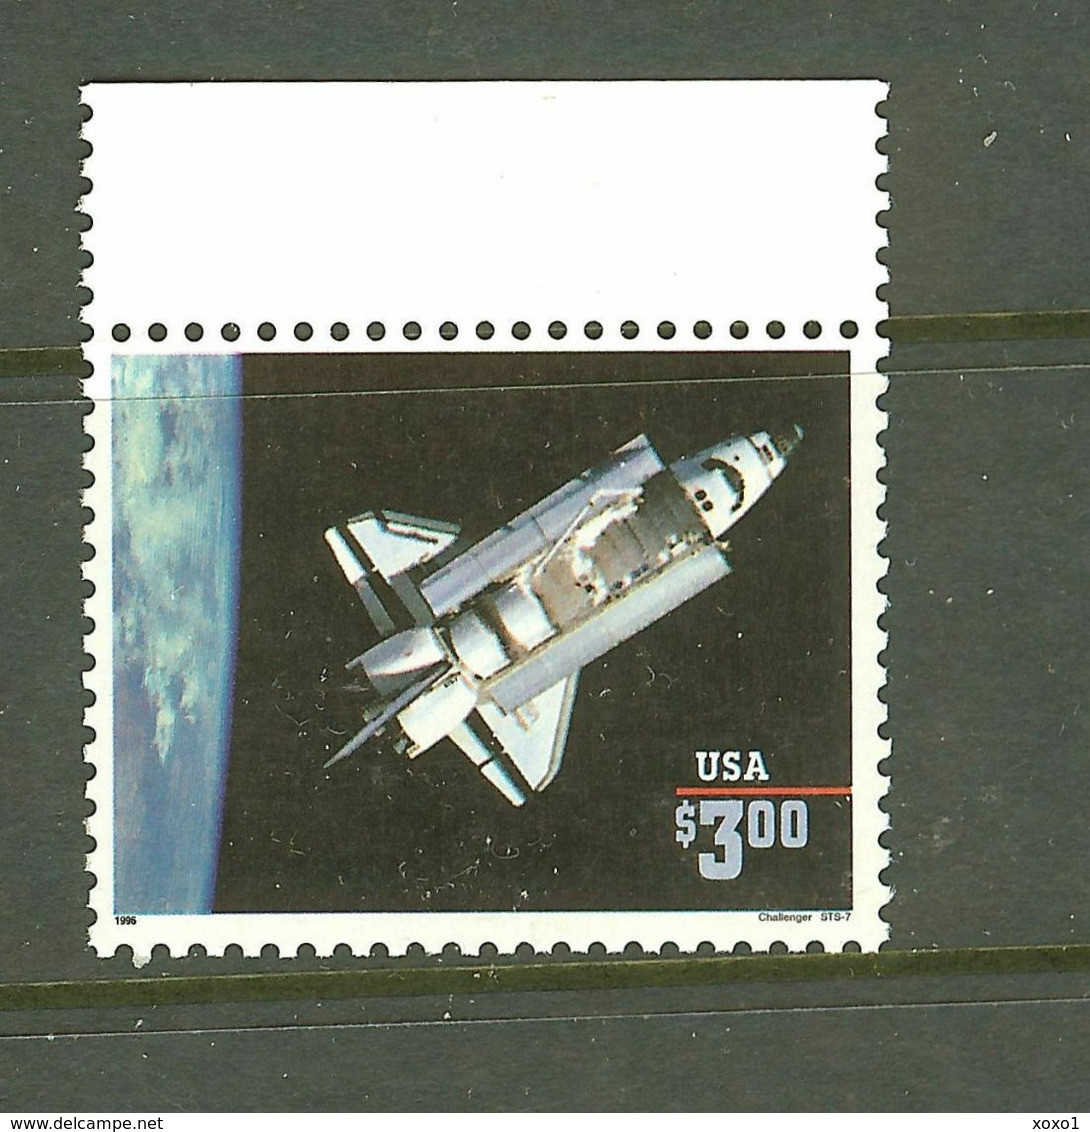 USA 1996 MiNr. 2581 II  CHALLENGER SPACE SHUTTLE 1v  MNH**  8.50 € - USA